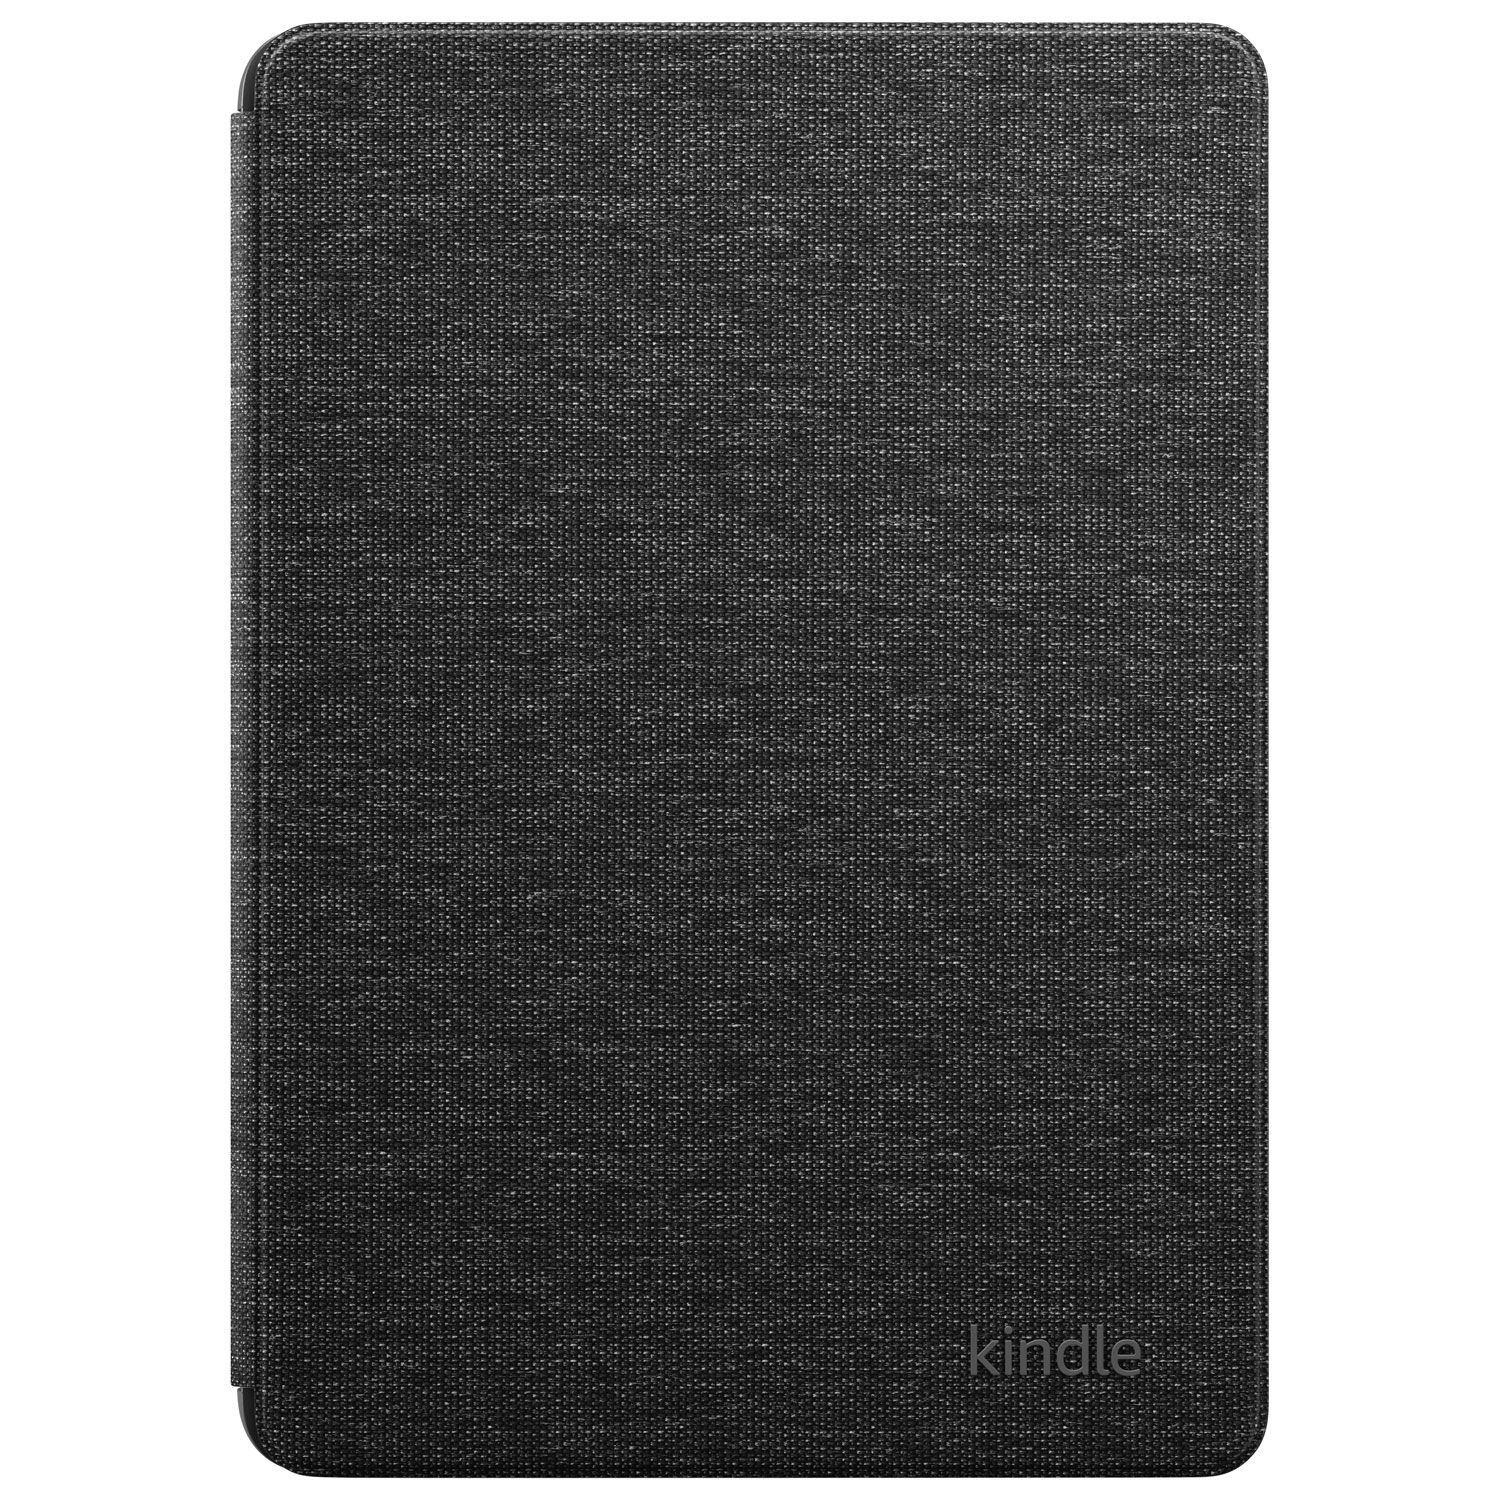 Amazon Kindle (11th Generation) Fabric Cover - Black